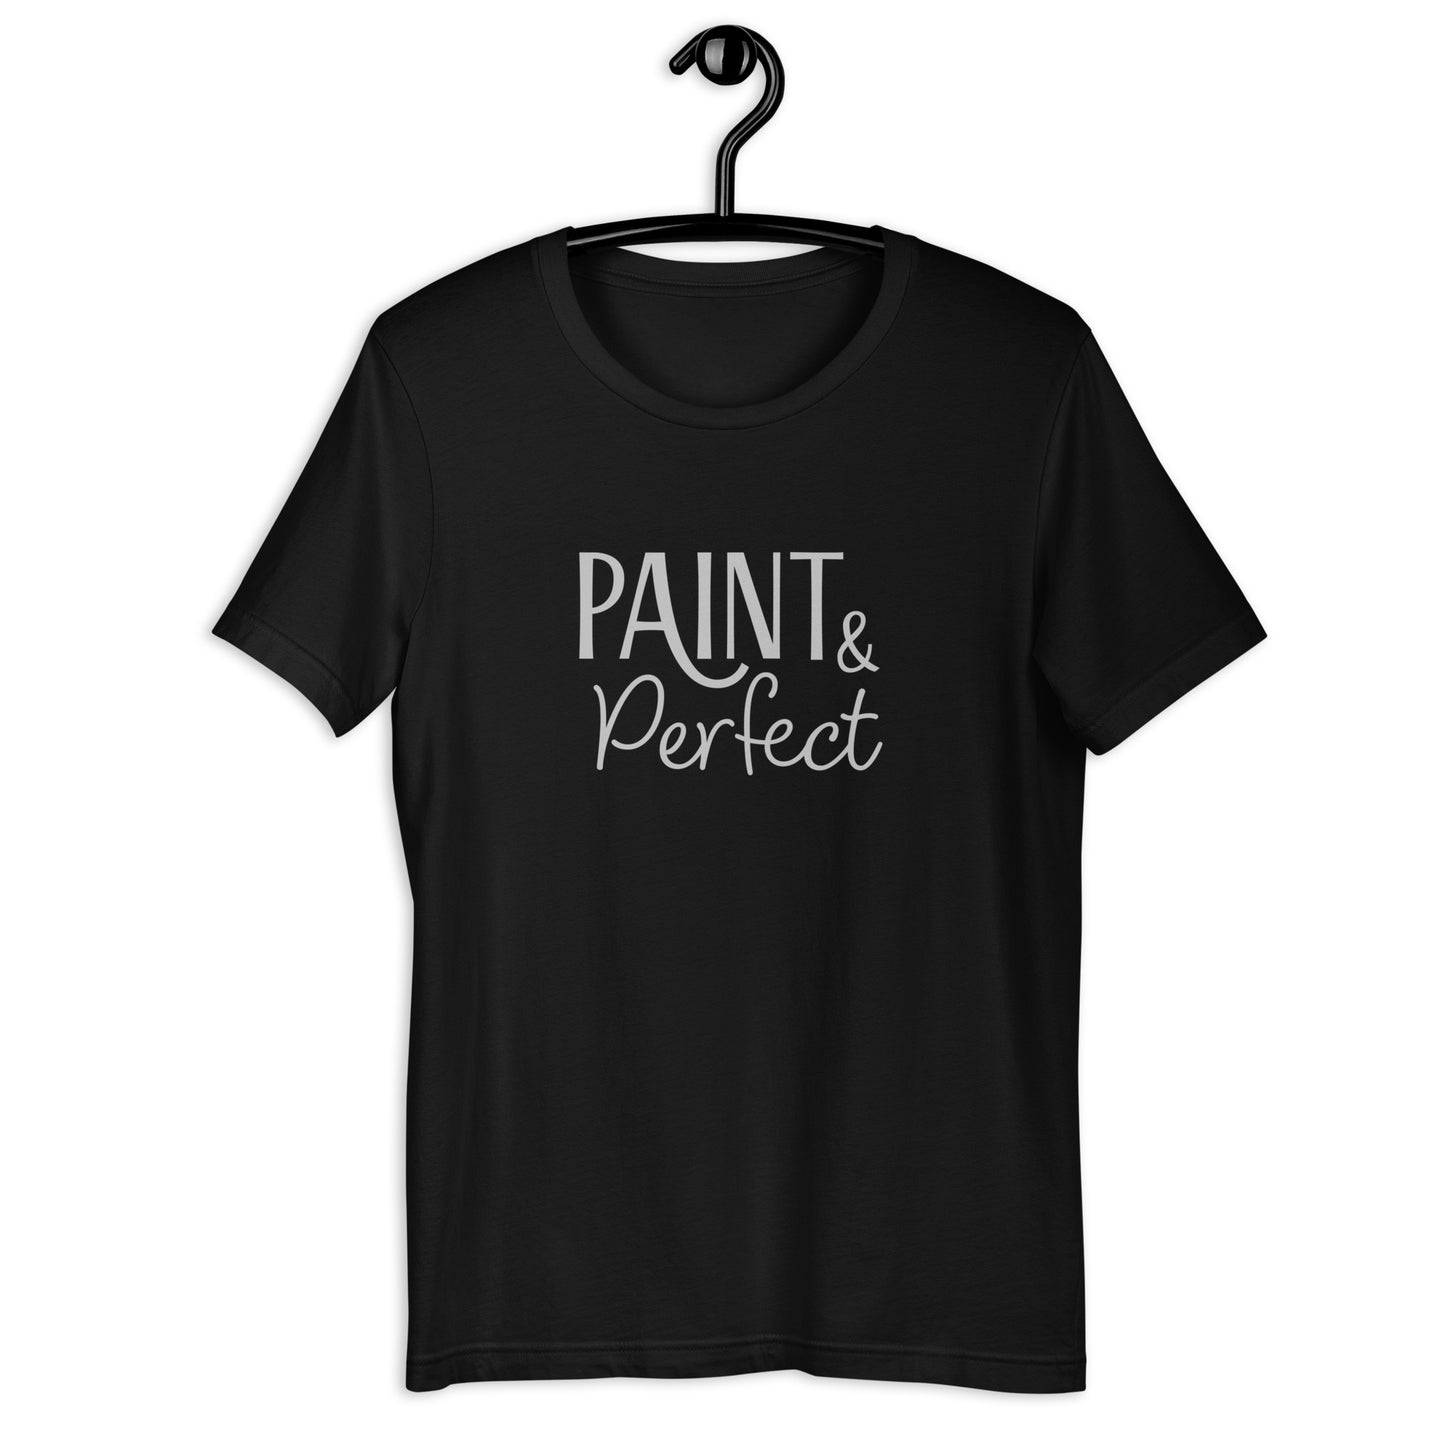 Paint & Perfect, Equestrian T-shirt